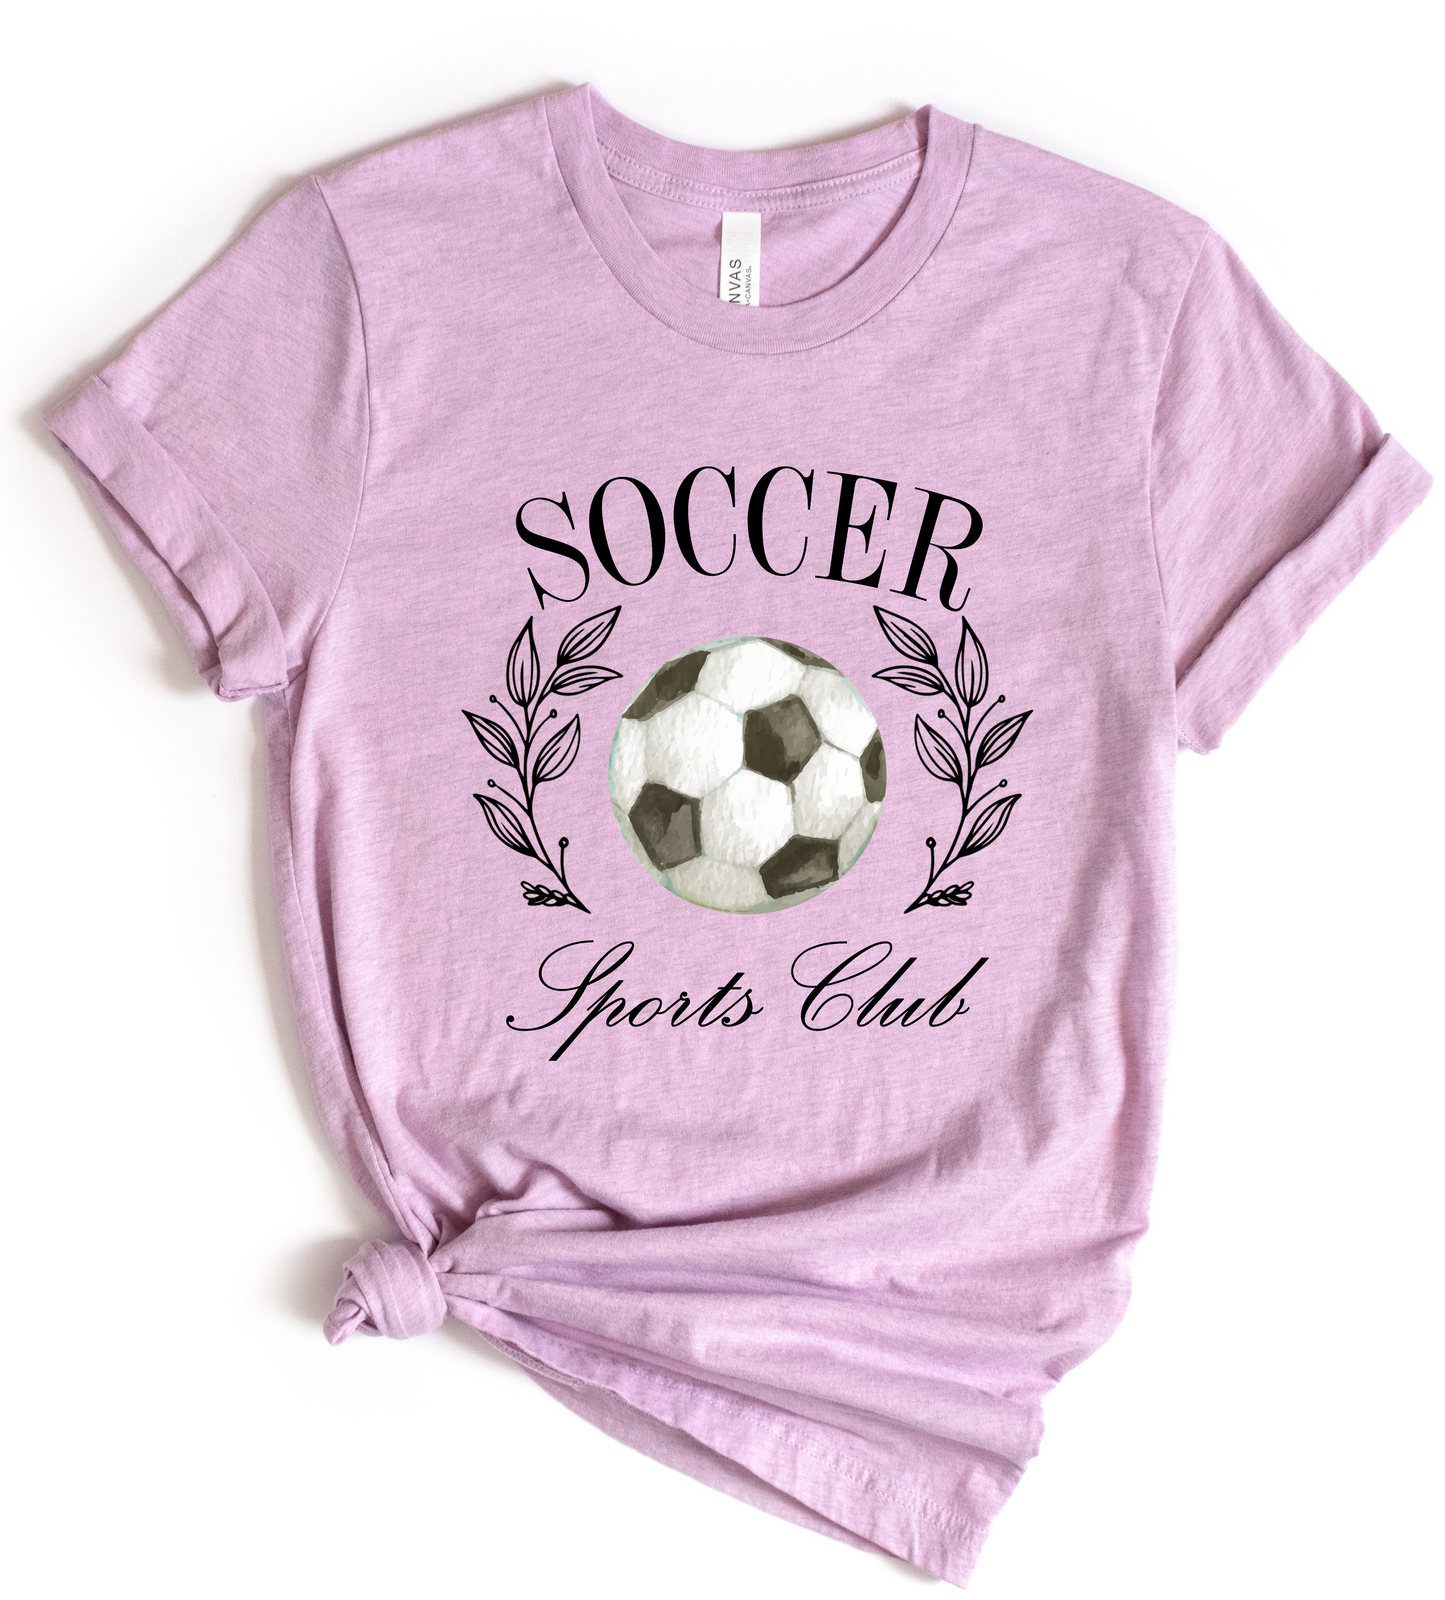 Soccer Sports Club DTF